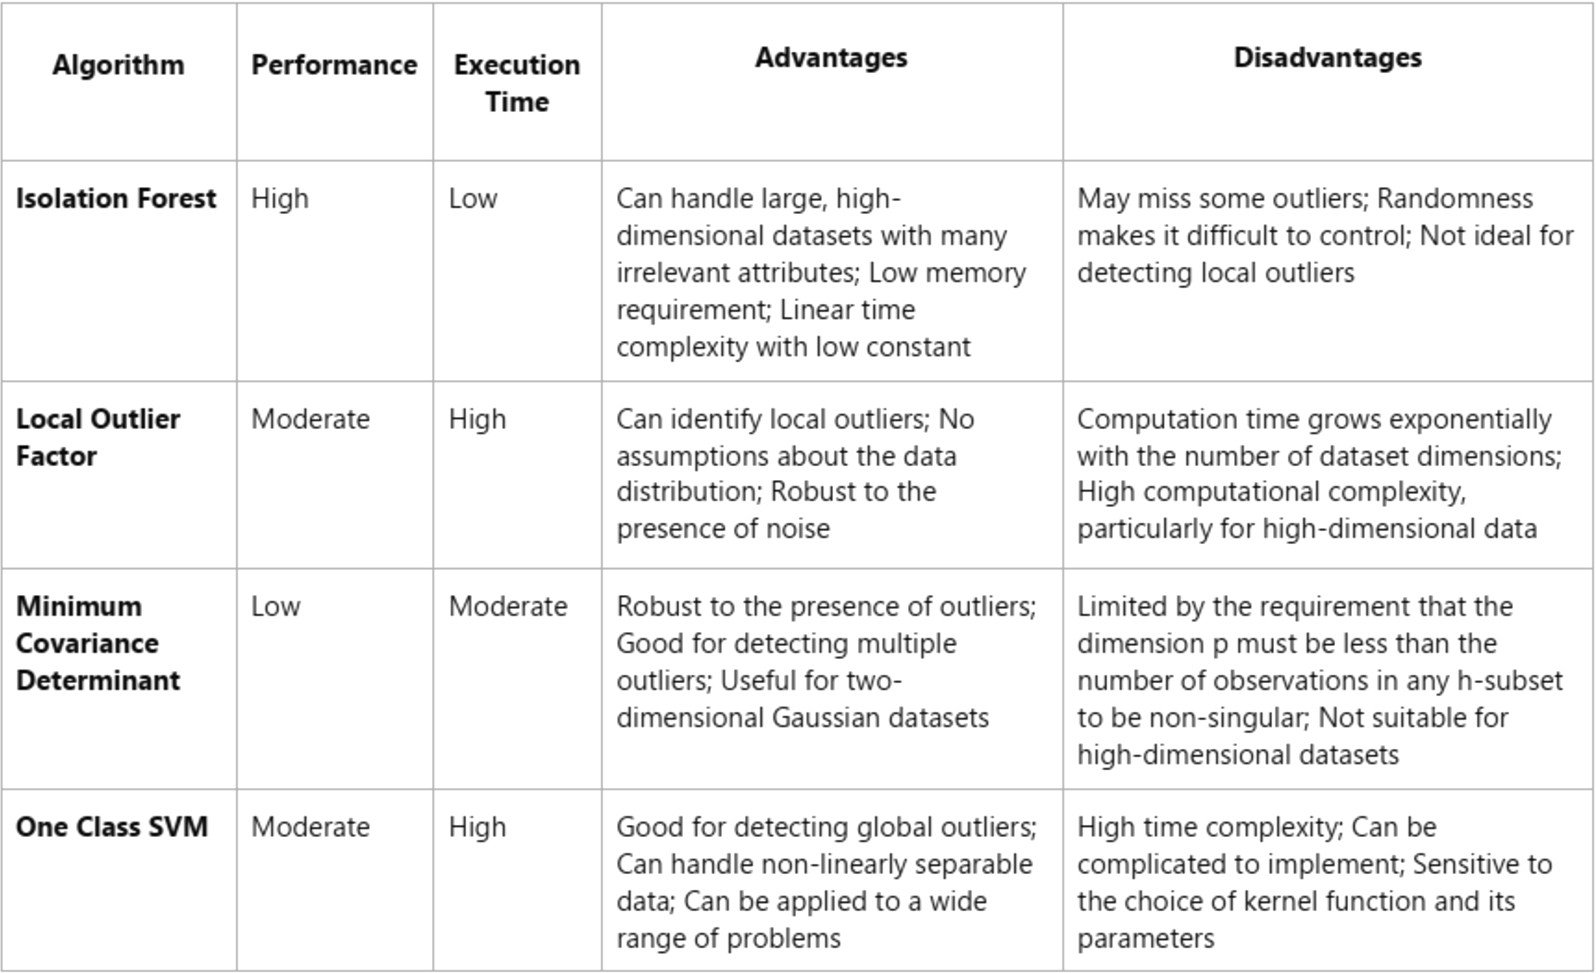 Comparison of outlier detection algorithms based on performance, execution time, advantages, and disadvantages